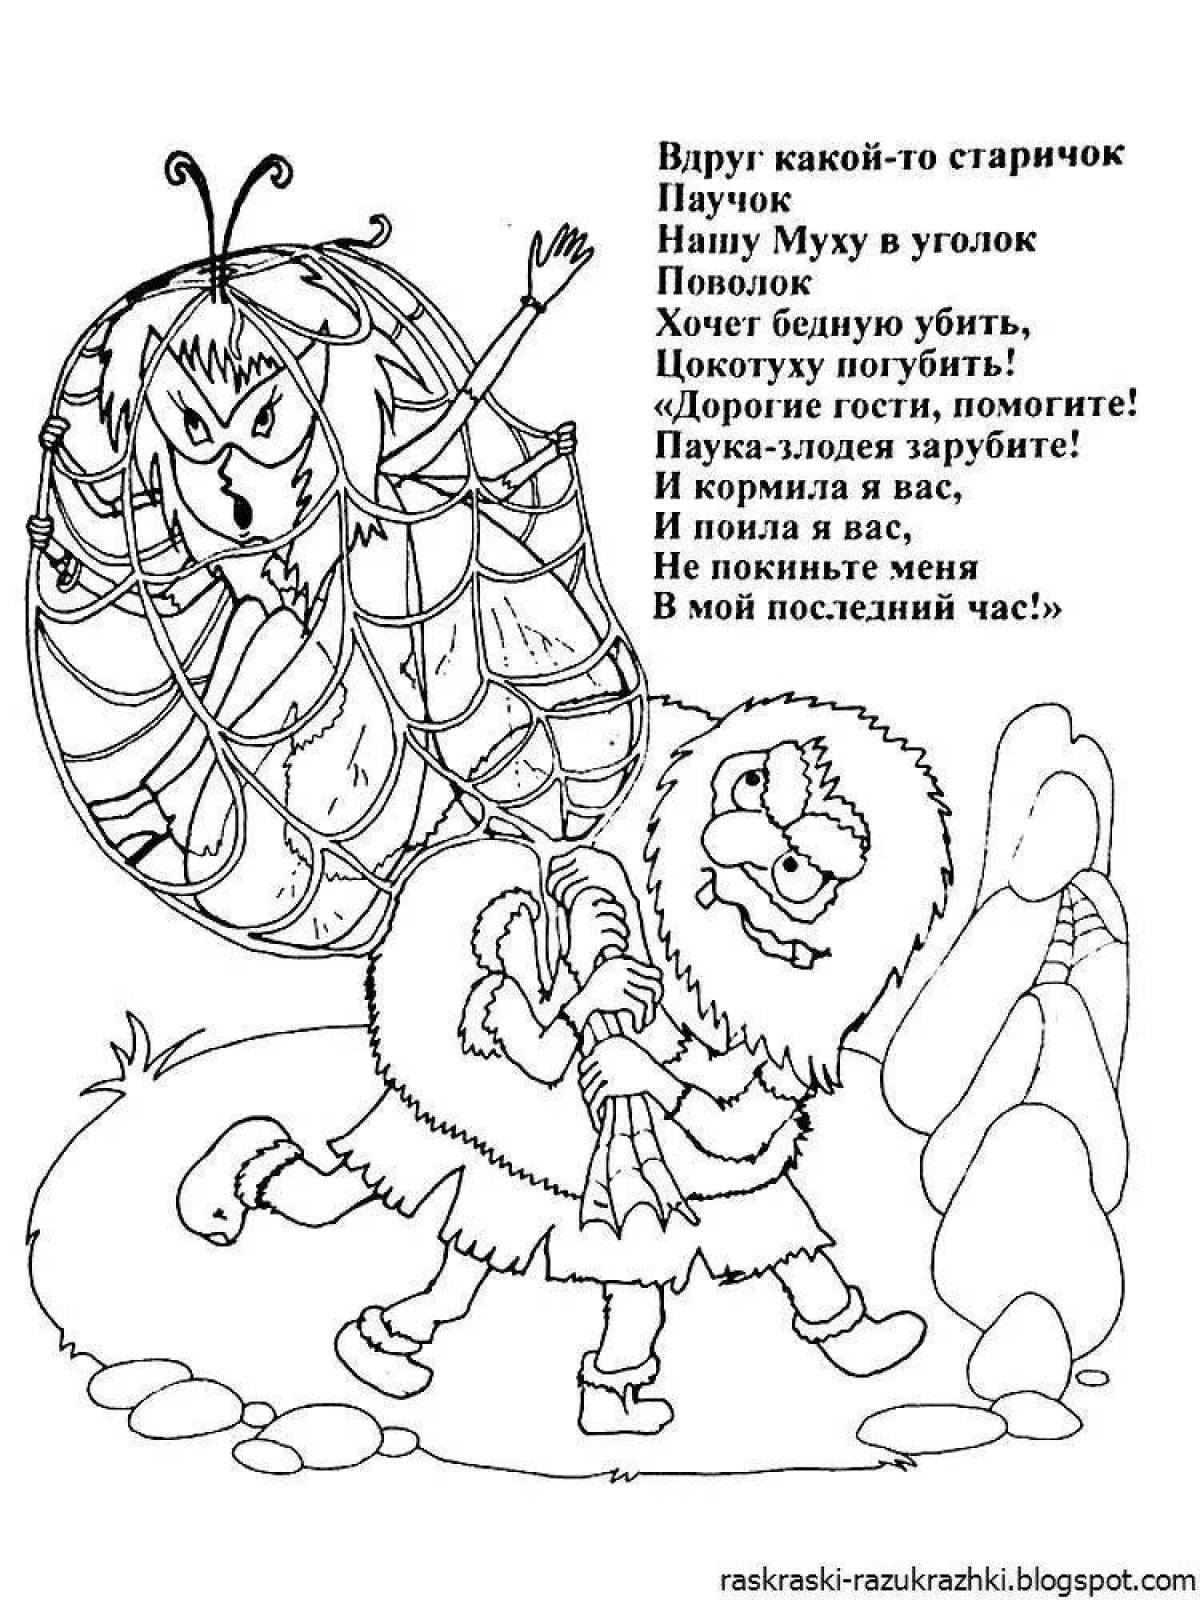 Color madness Chukovsky coloring book